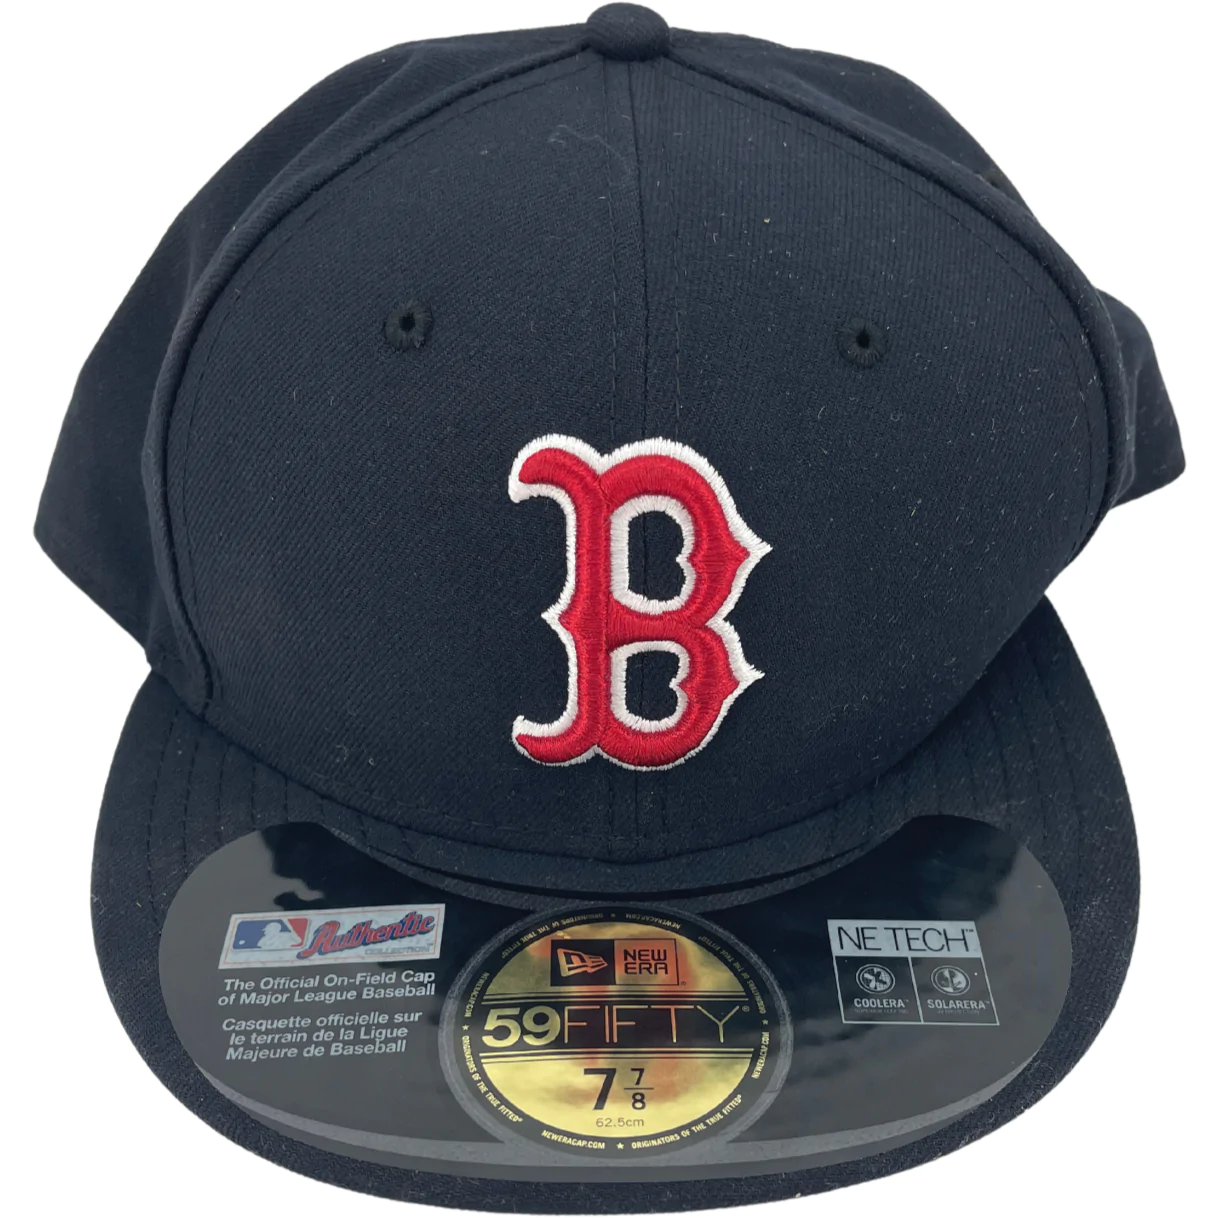 MLB Boston Red Sox Hat / Ball Cap / Black & Red / Size 7 7/8